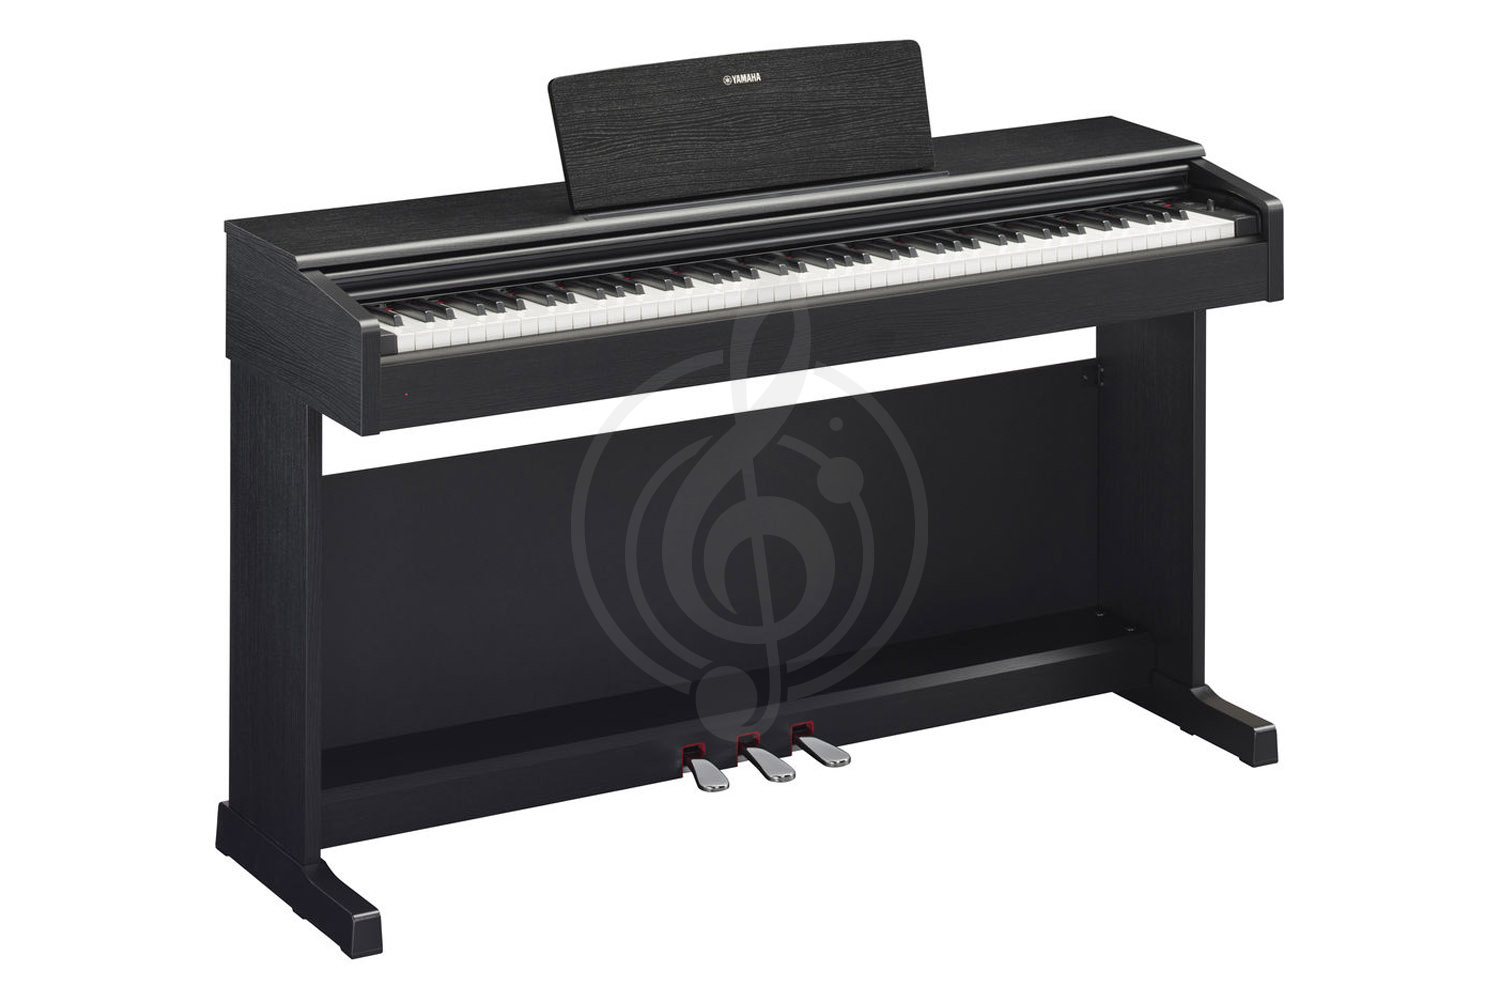 Цифровое пианино Цифровые пианино Yamaha Yamaha YDP-144B - цифровое пианино, цвет чёрный YDP-144B - фото 1